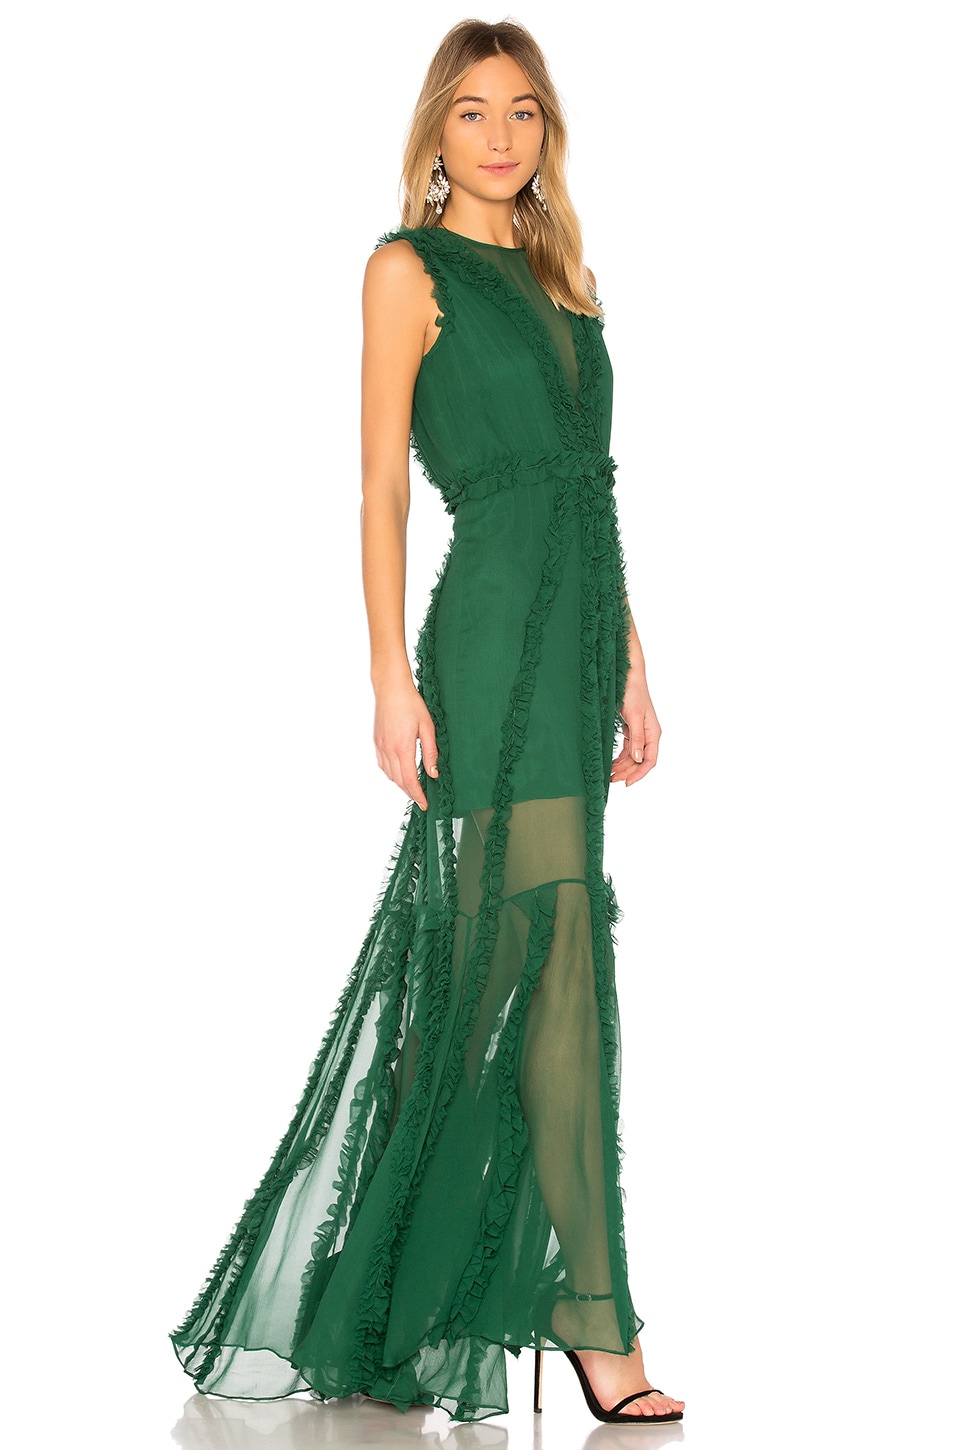 alexis green dress